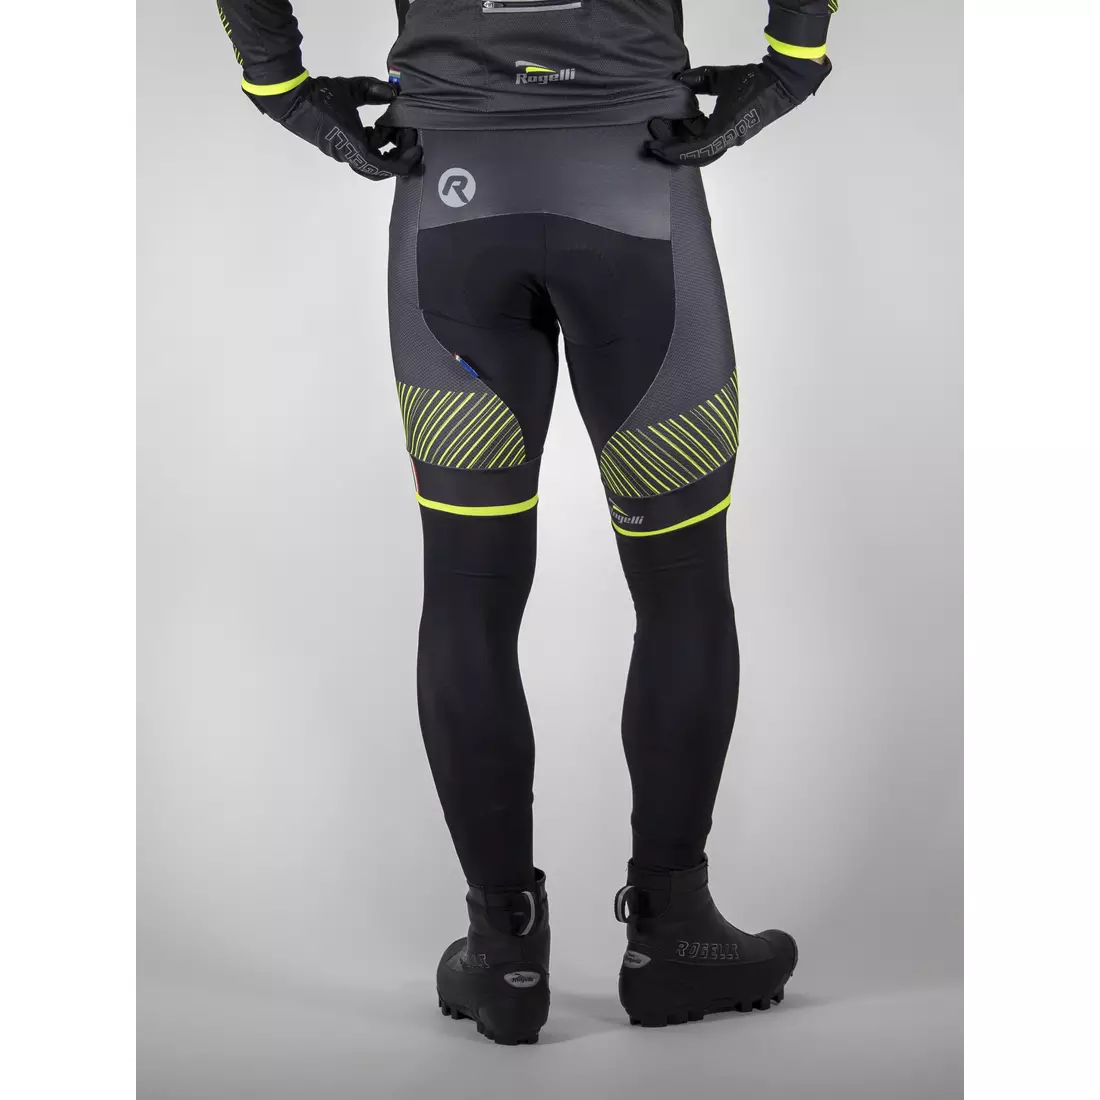 Zateplené cyklistické kalhoty ROGELLI RITMO, černo-fluor-žluté